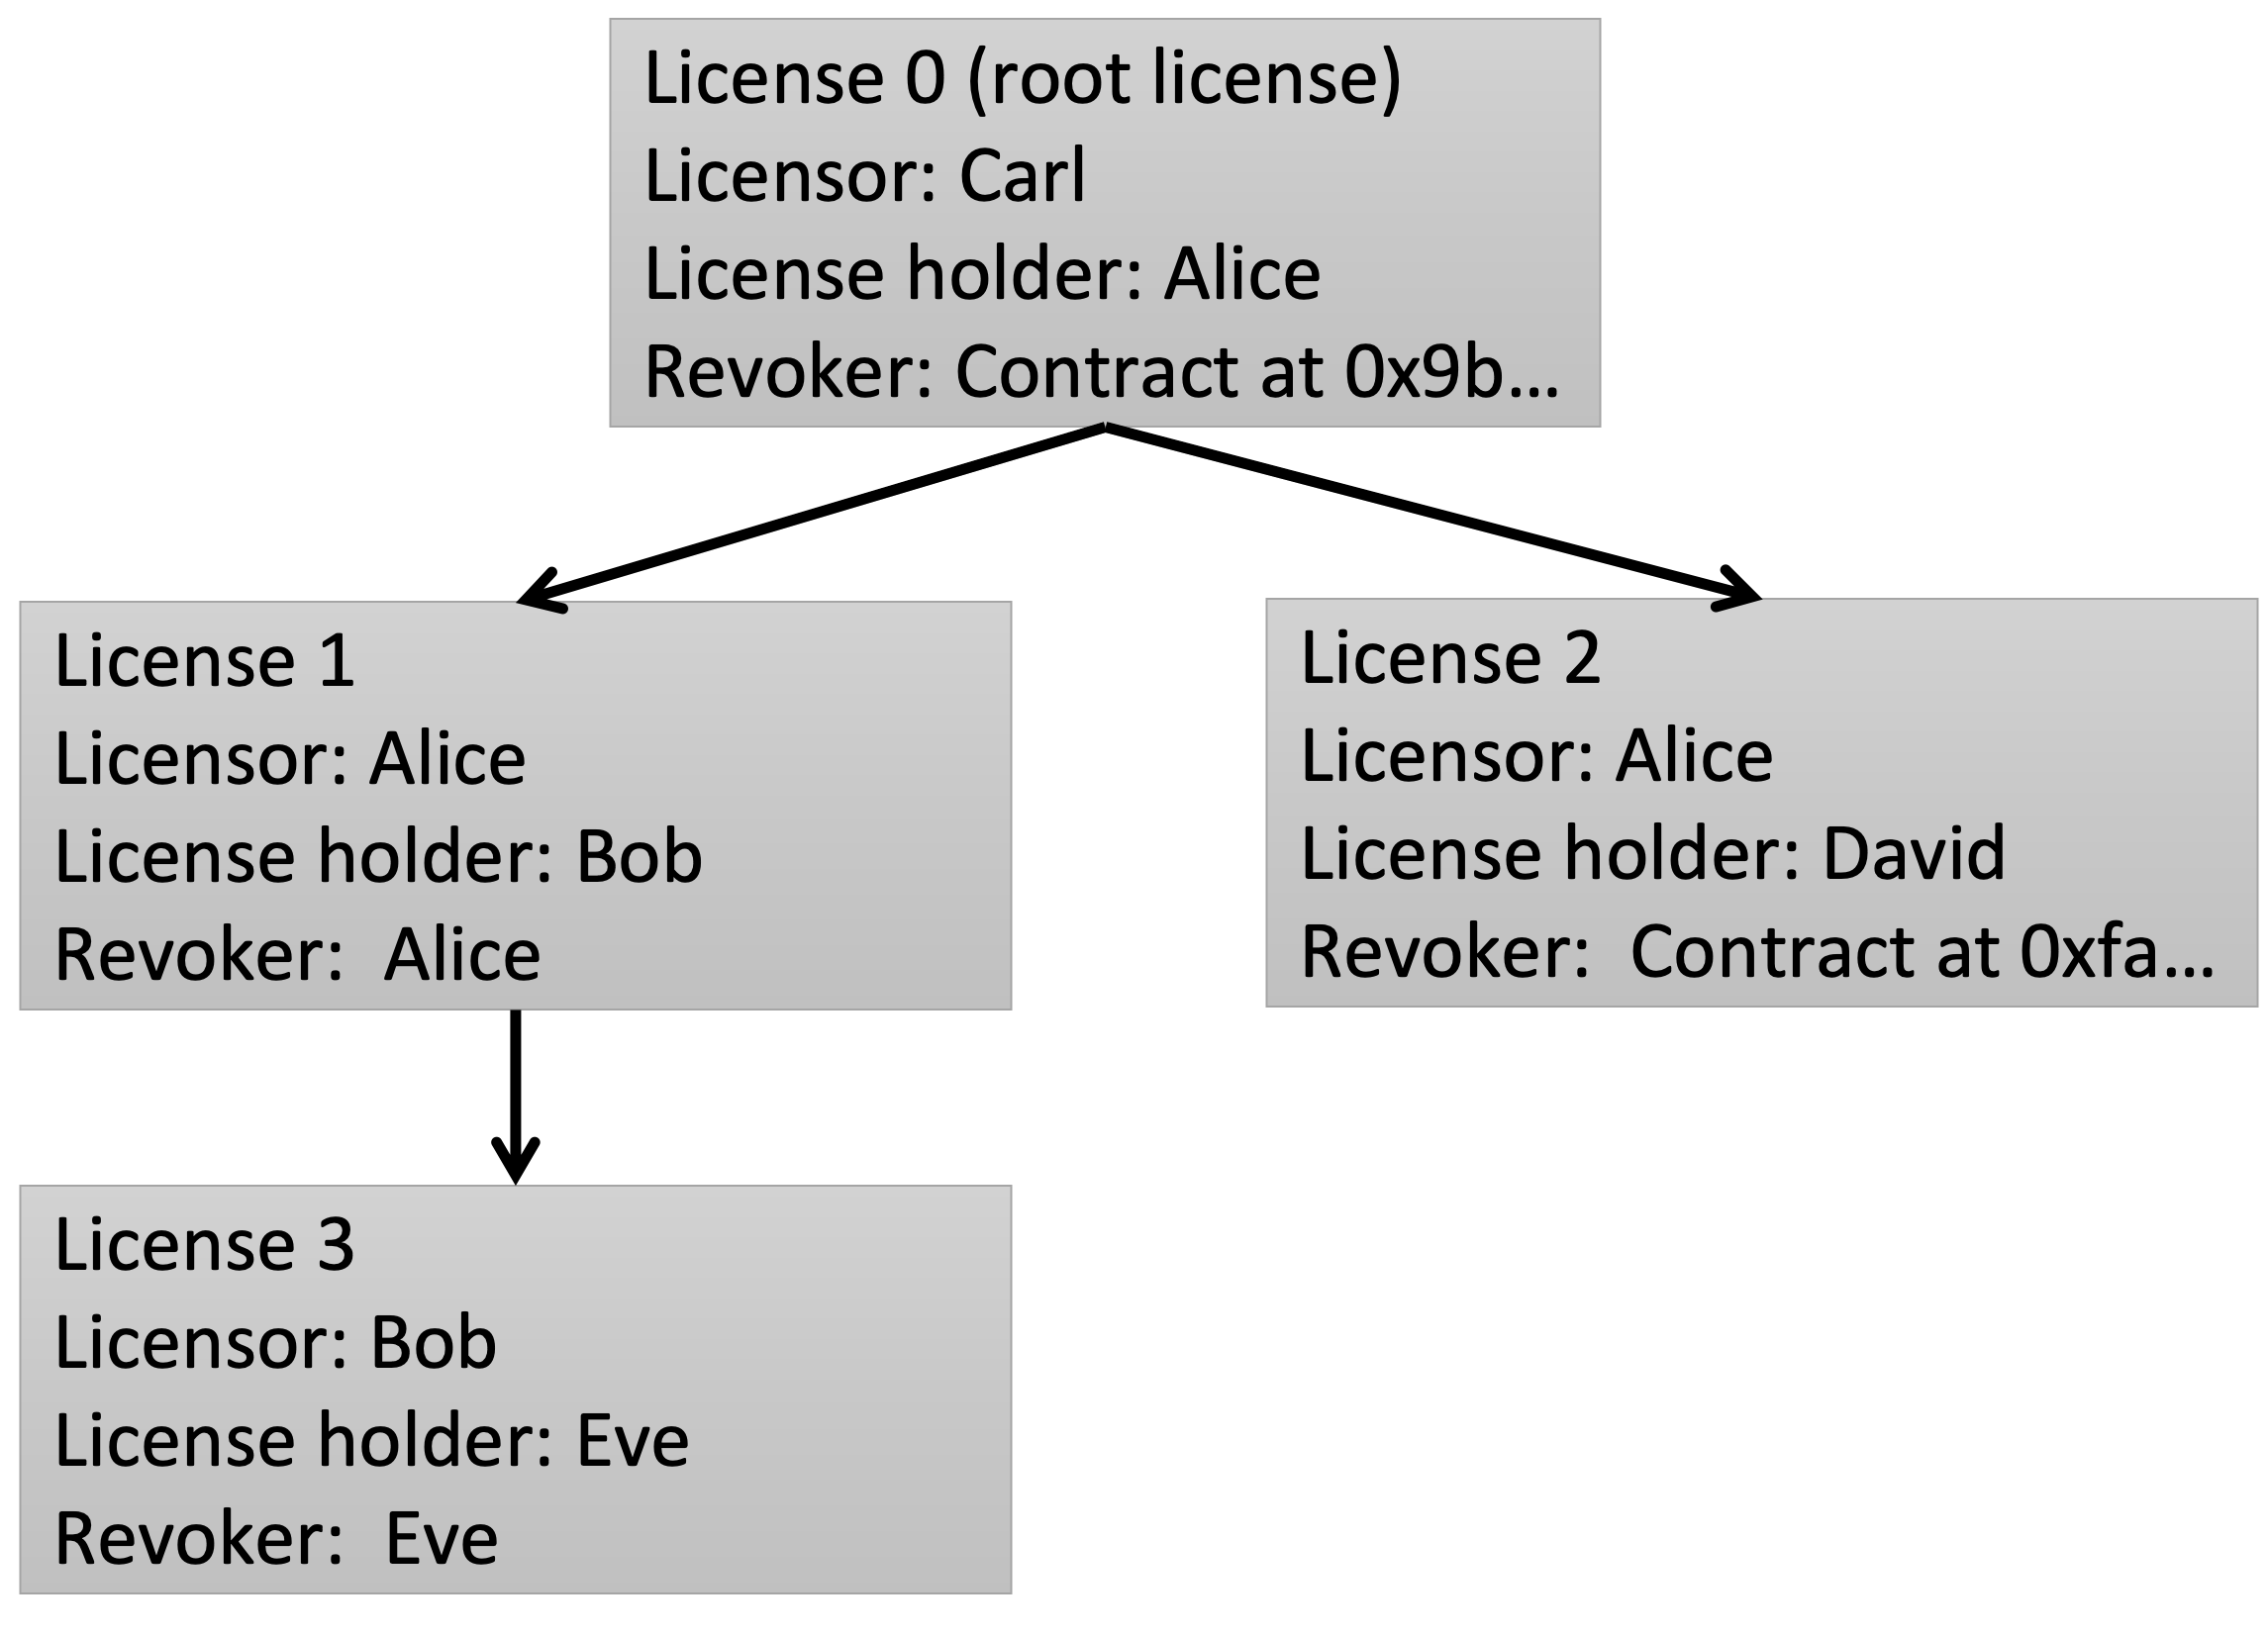 The license tree